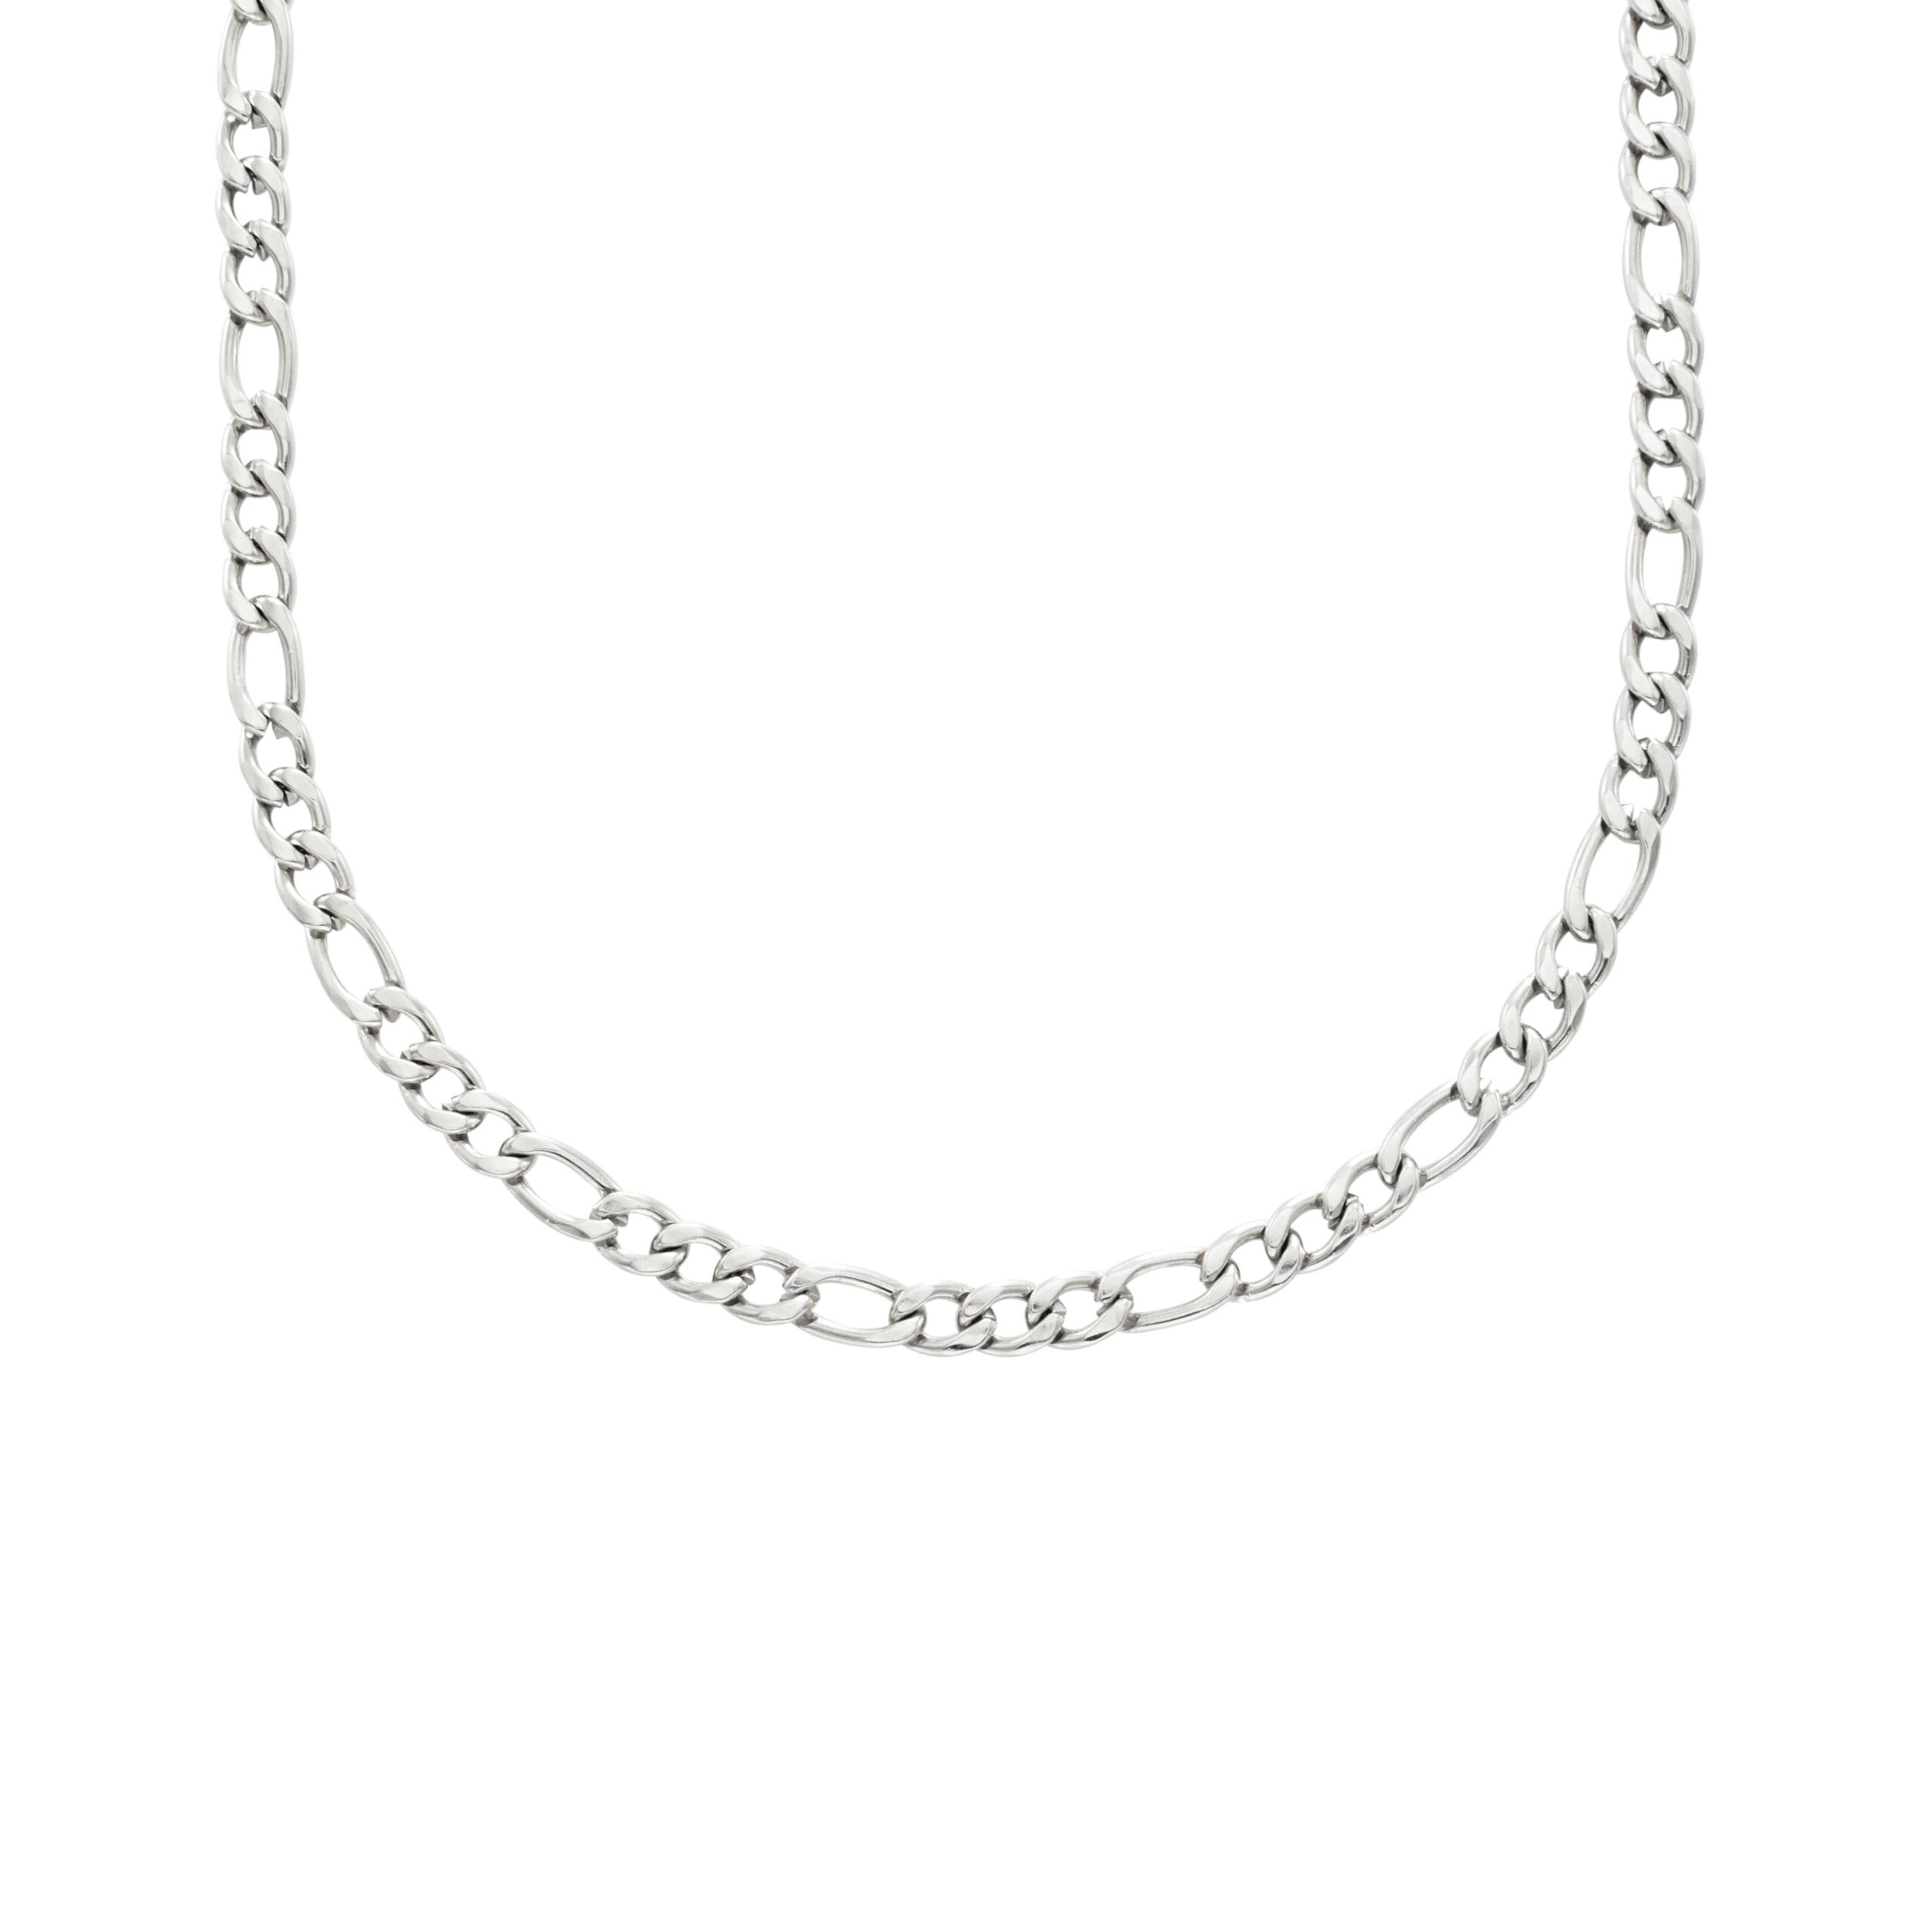 Necklaces – velvet accessoriess